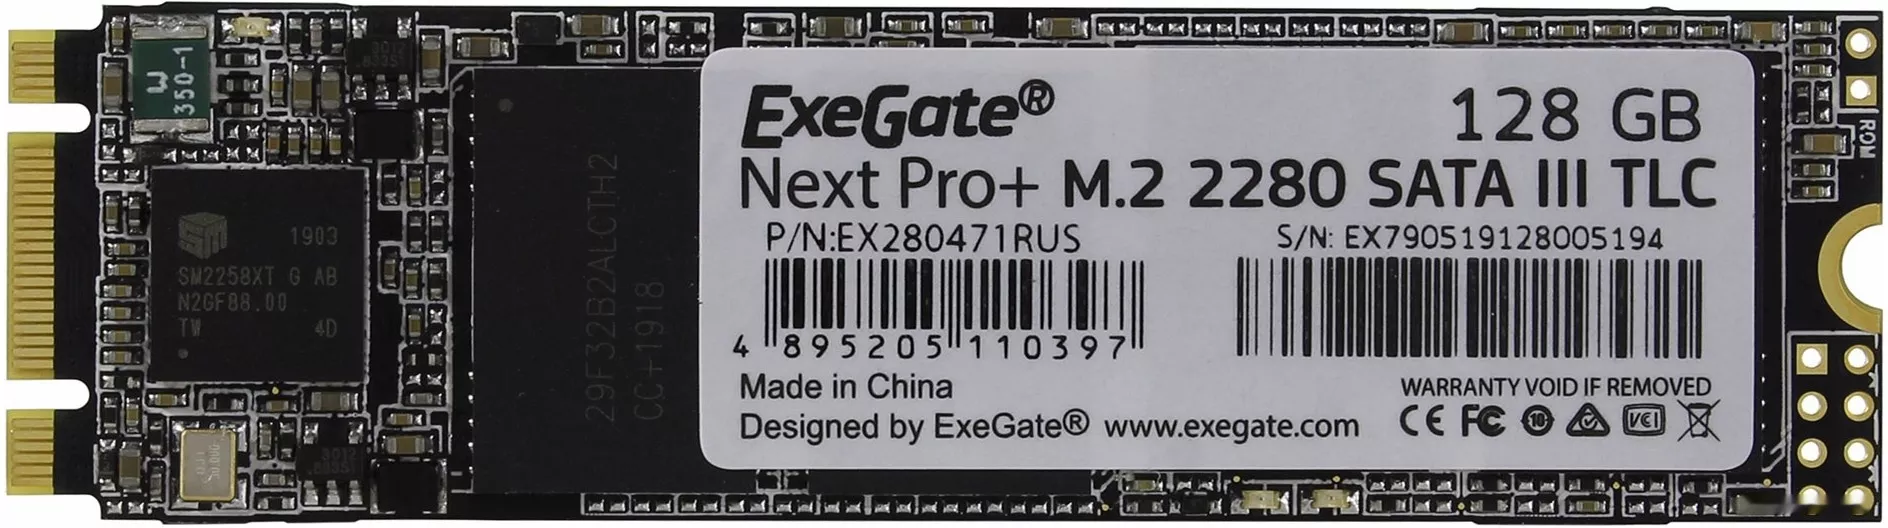 Жесткий диск SSD ExeGate Next Pro+ 128GB EX280471RUS фото